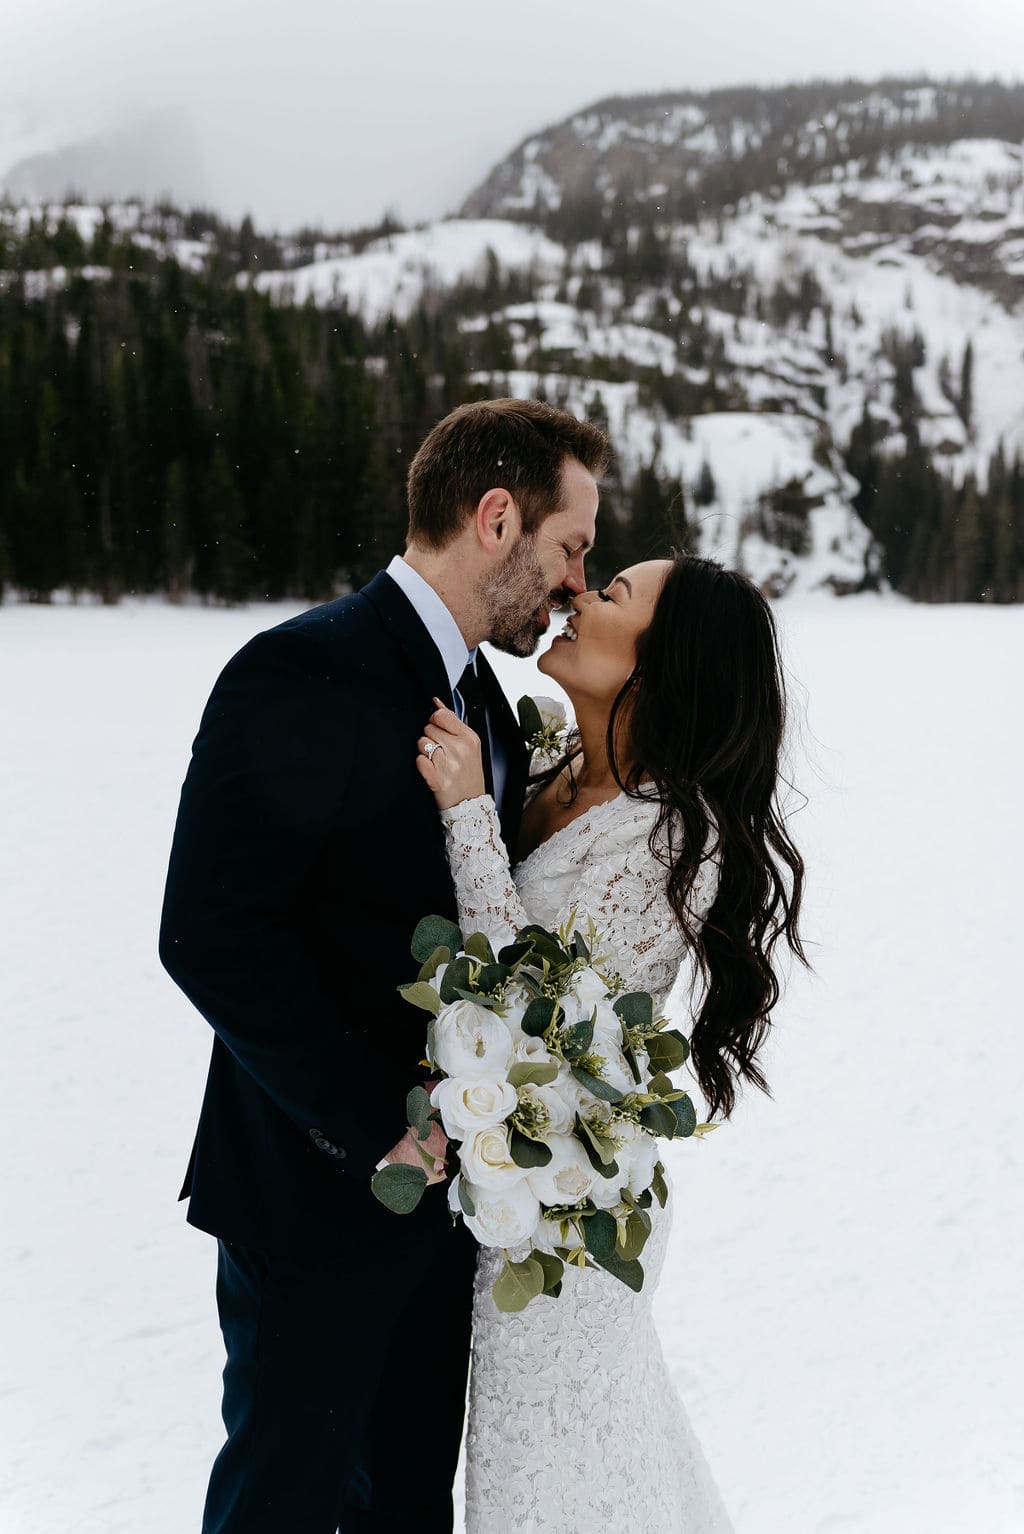 Windy and Snowy Winter Wedding Photos at Bear Lake RMNP